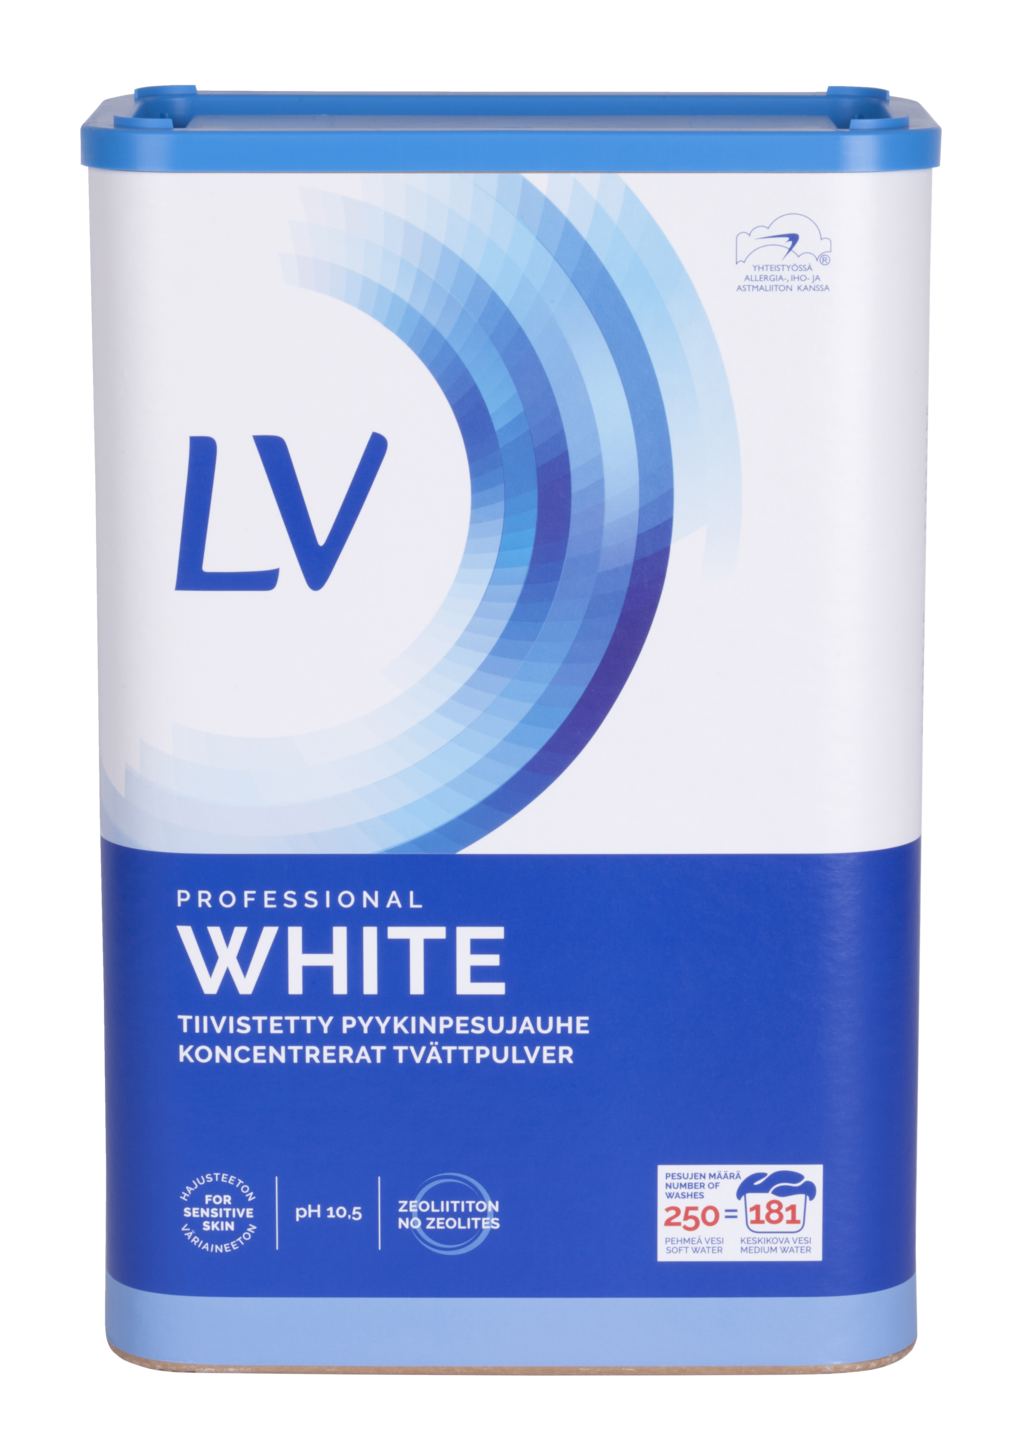 LV White Professional tiivistetty valkopyykinpesujauhe 8kg